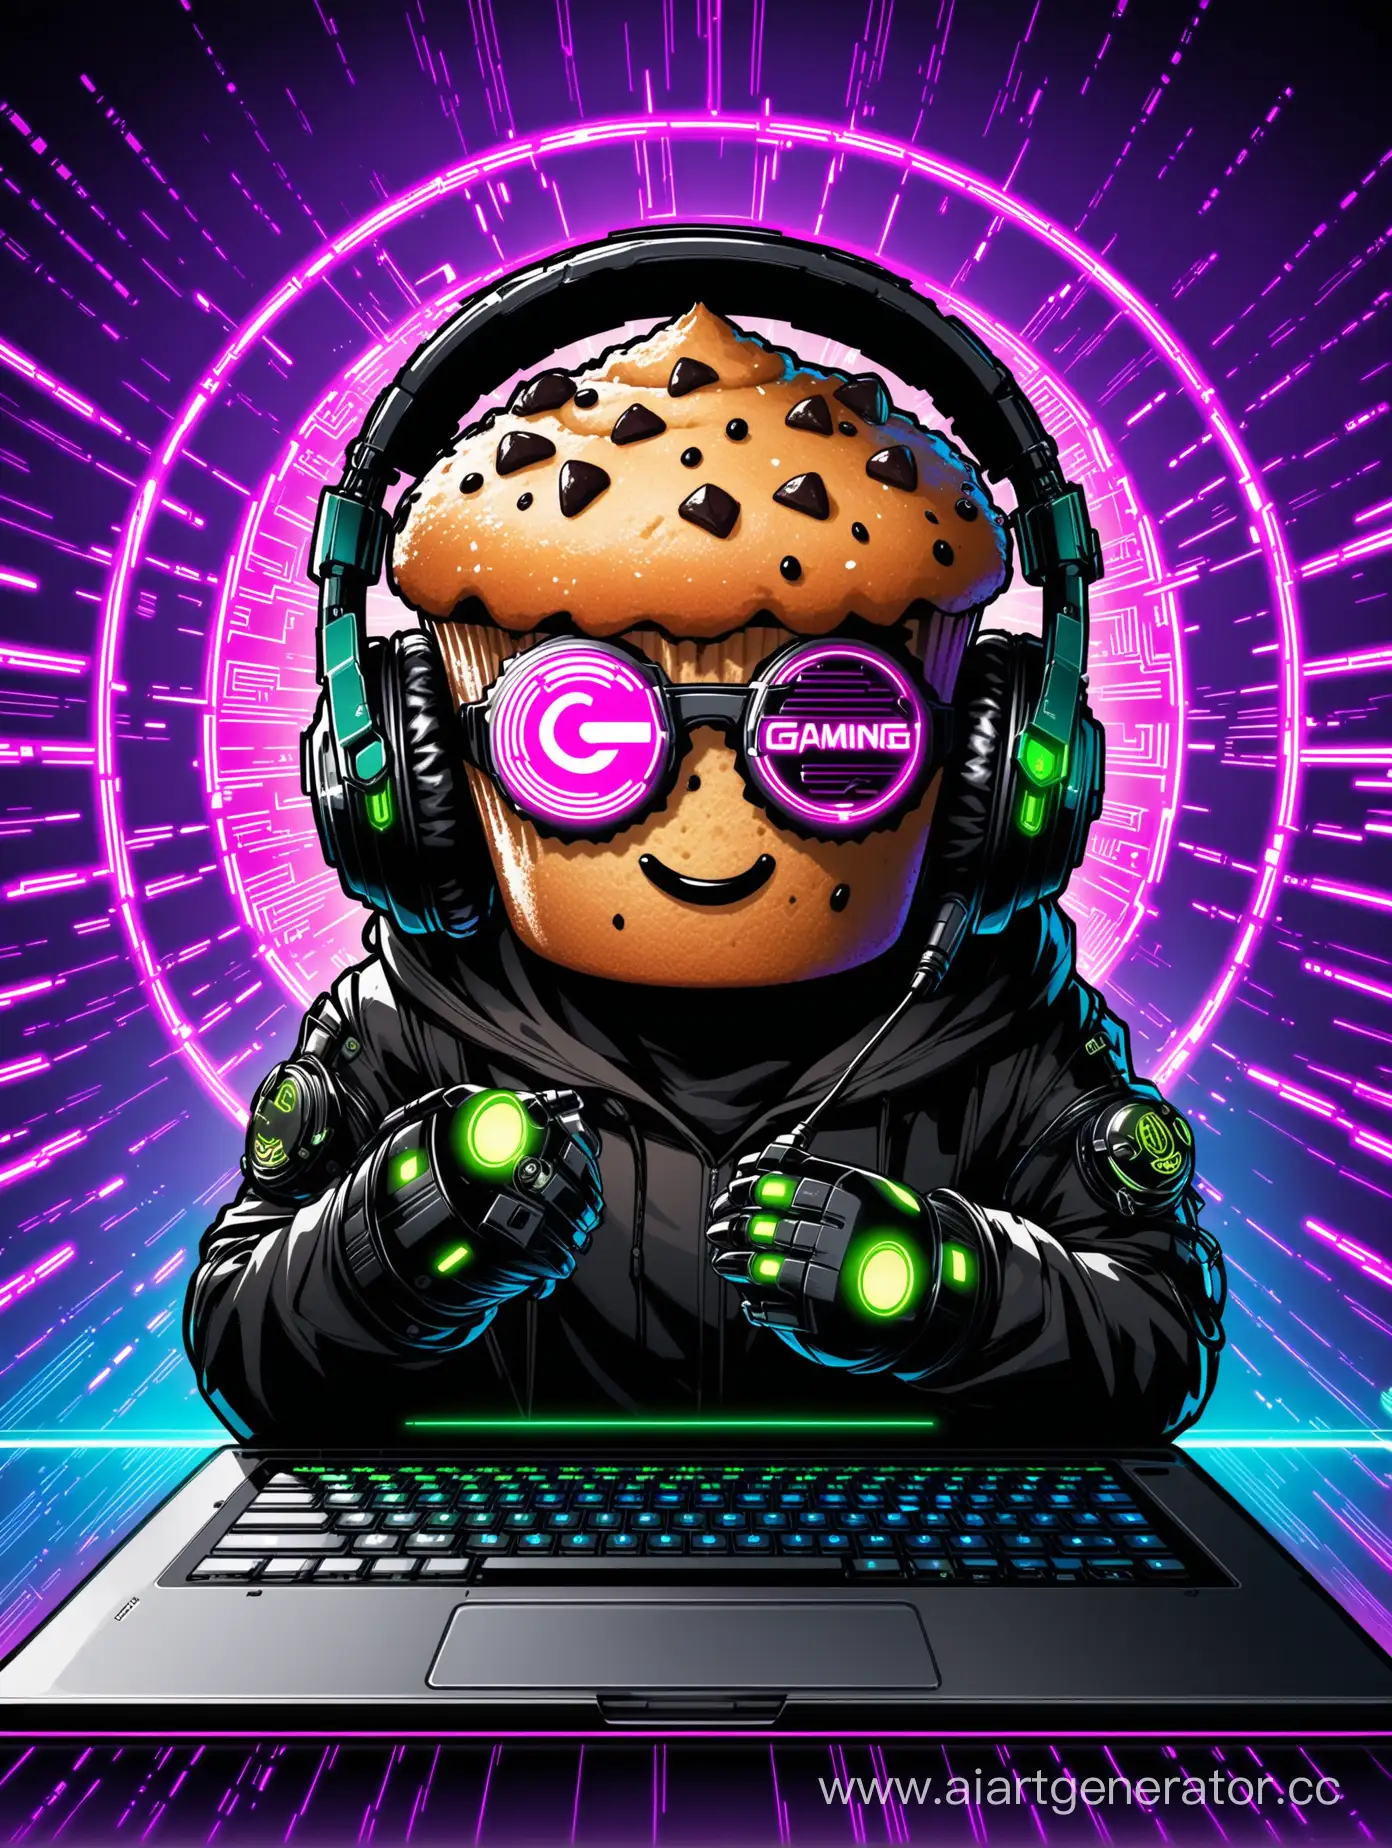 Cyberpunk-Muffin-with-Gaming-Gear-Futuristic-Dessert-with-Tech-Accessories